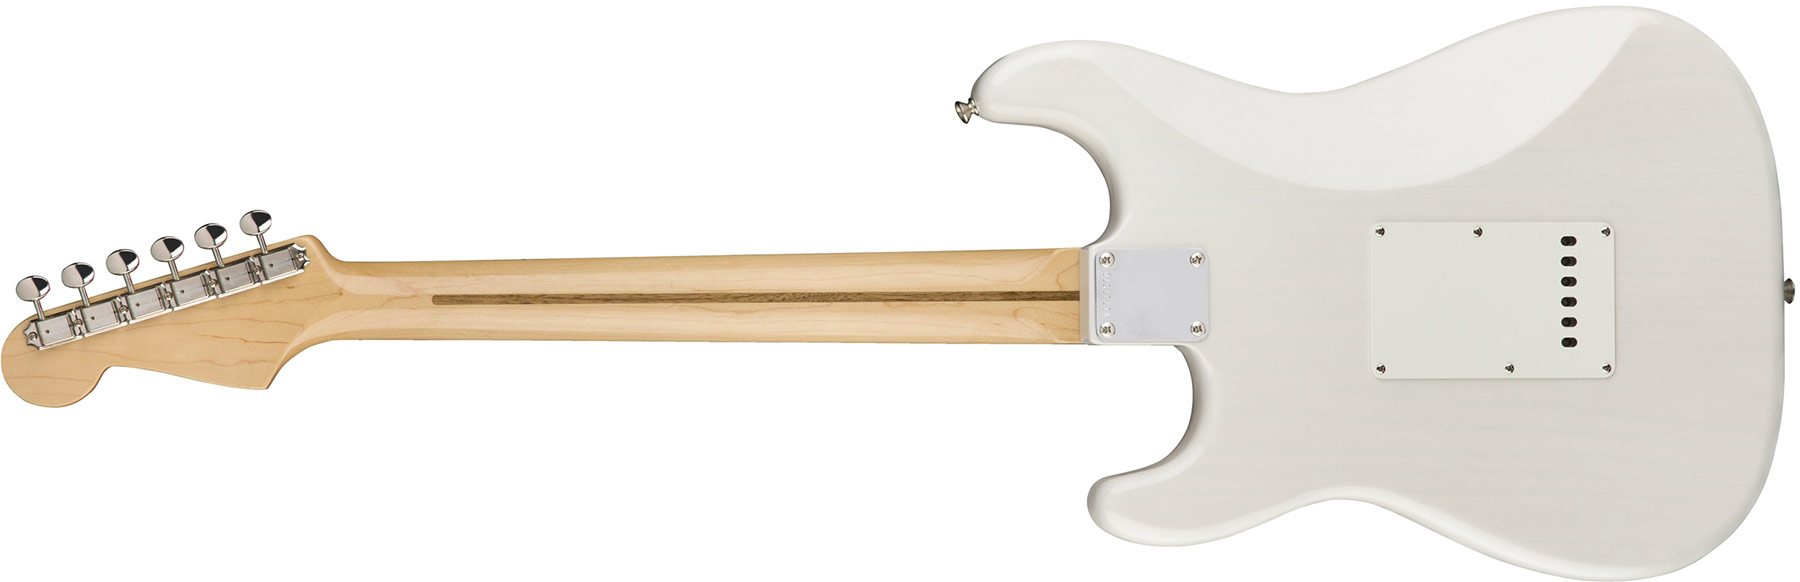 Fender Strat '50s American Original Usa Sss Mn - White Blonde - Str shape electric guitar - Variation 2